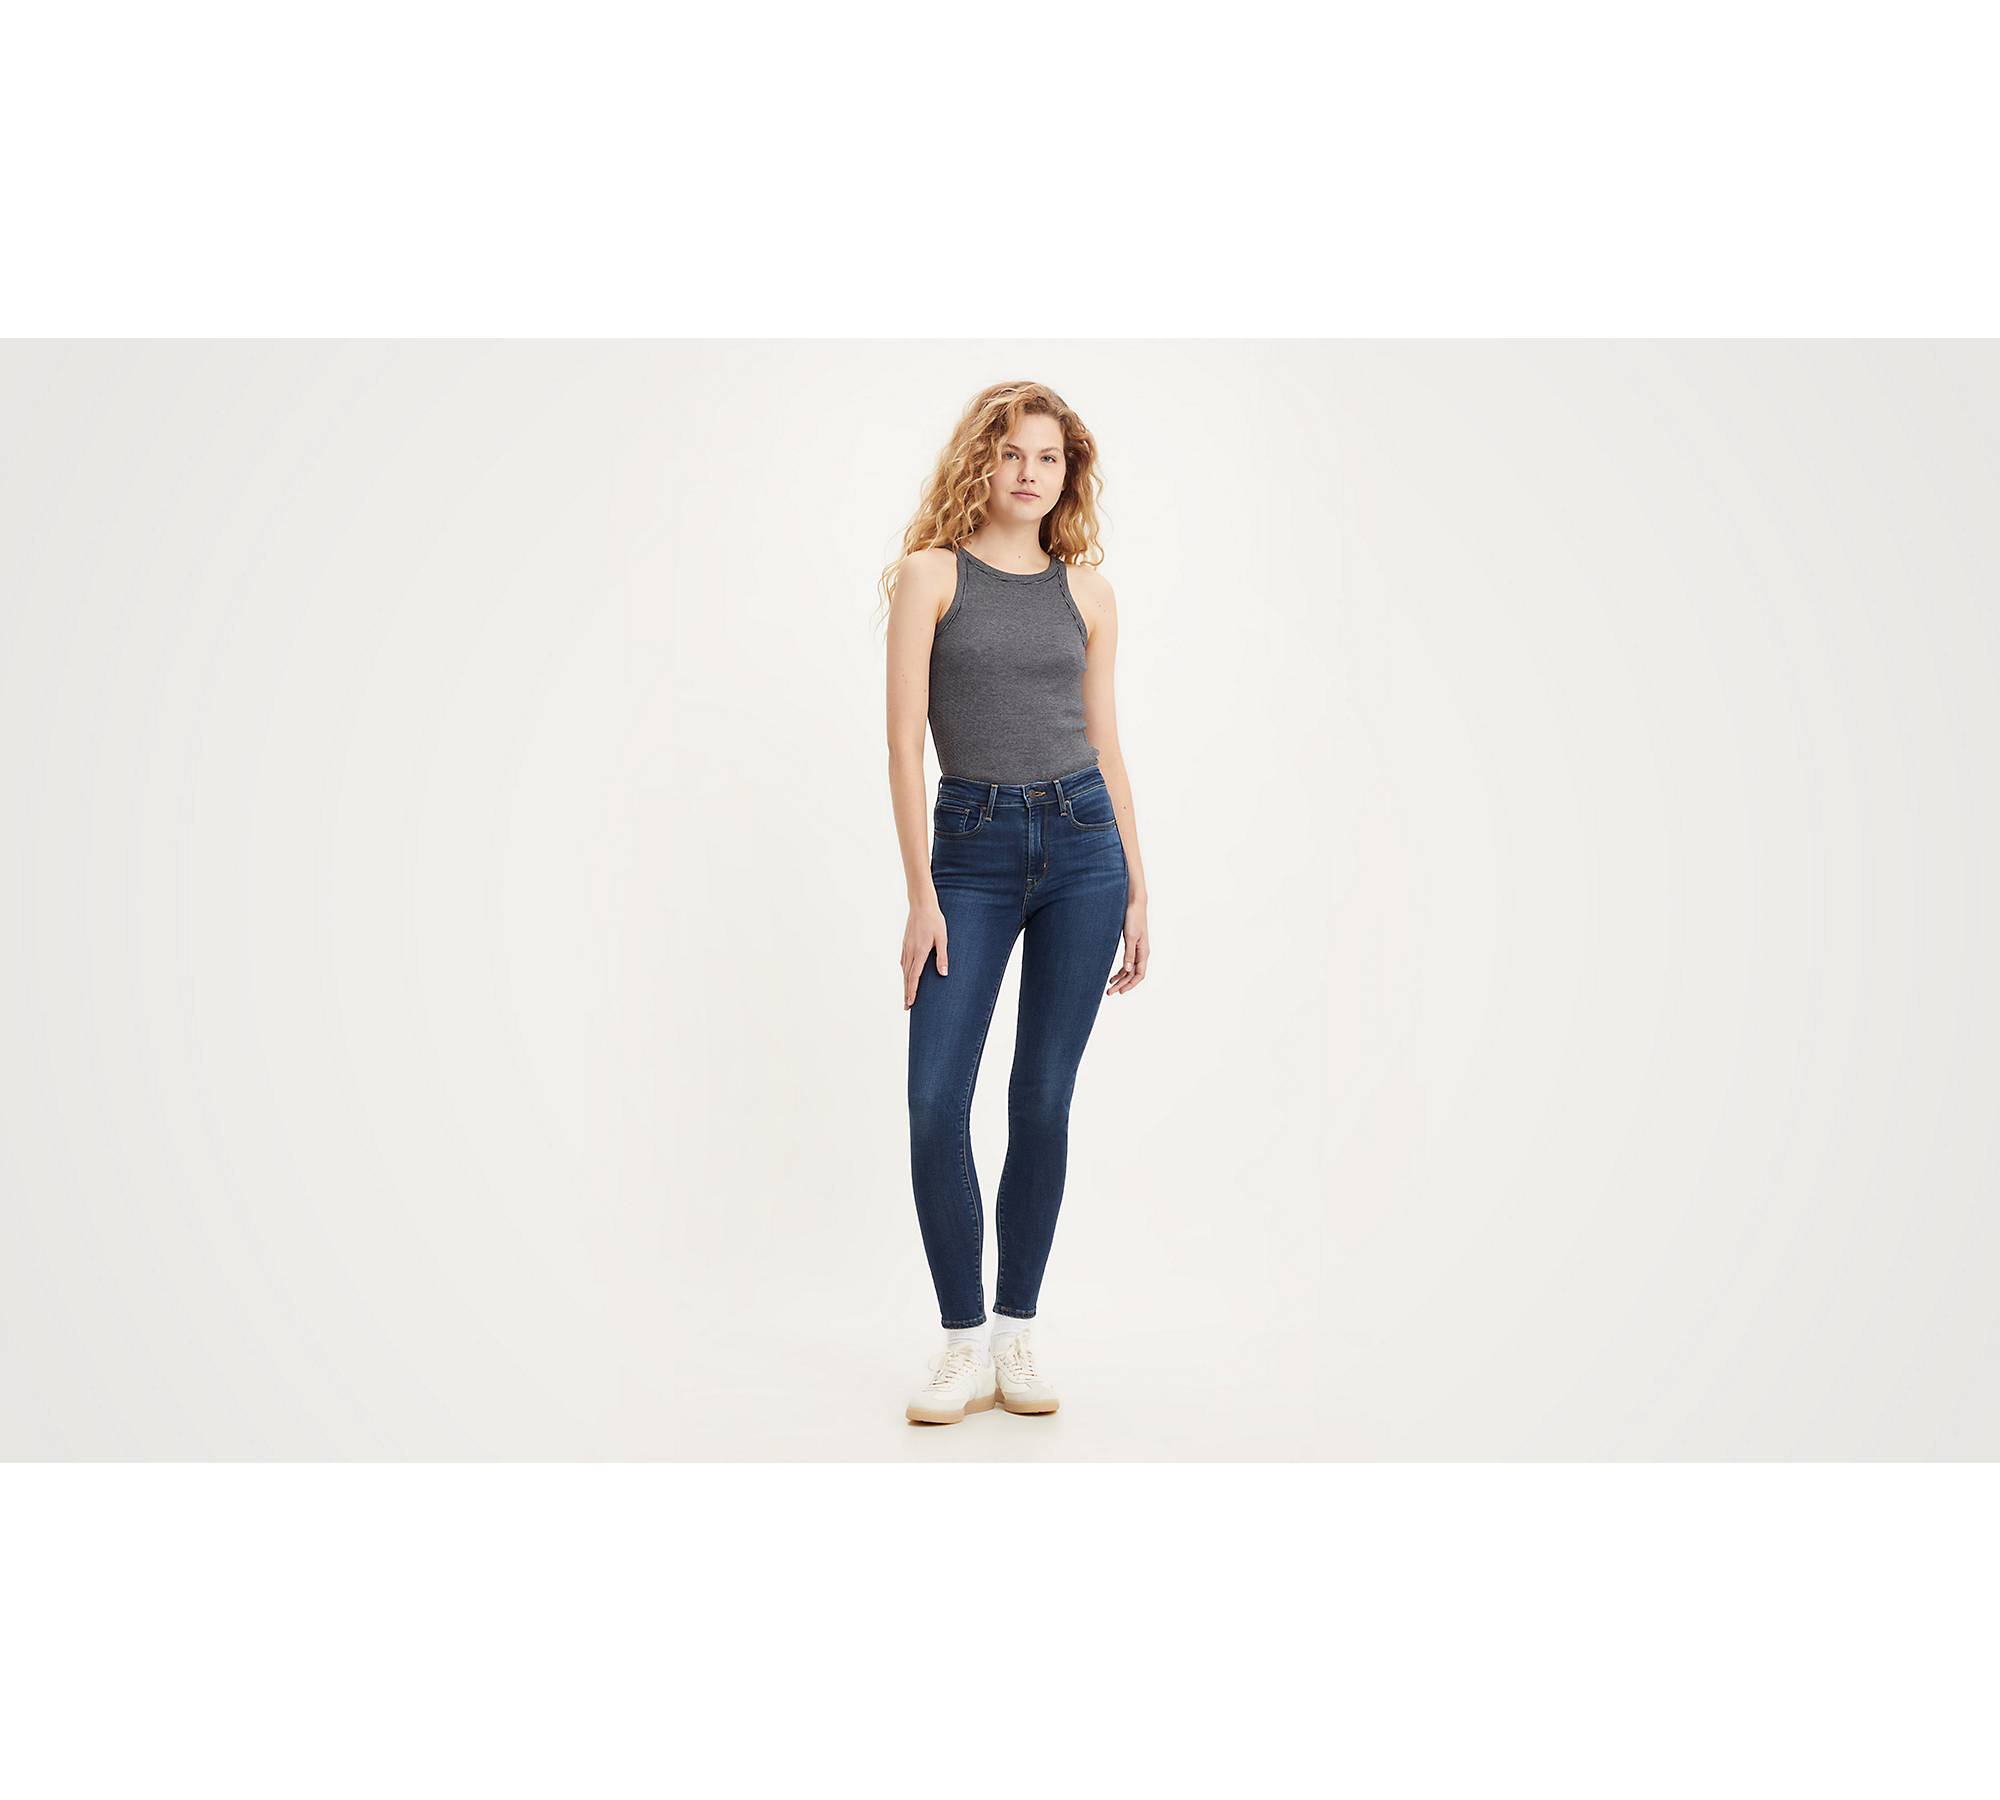 721 High Rise Skinny Women's Jeans - Dark Wash